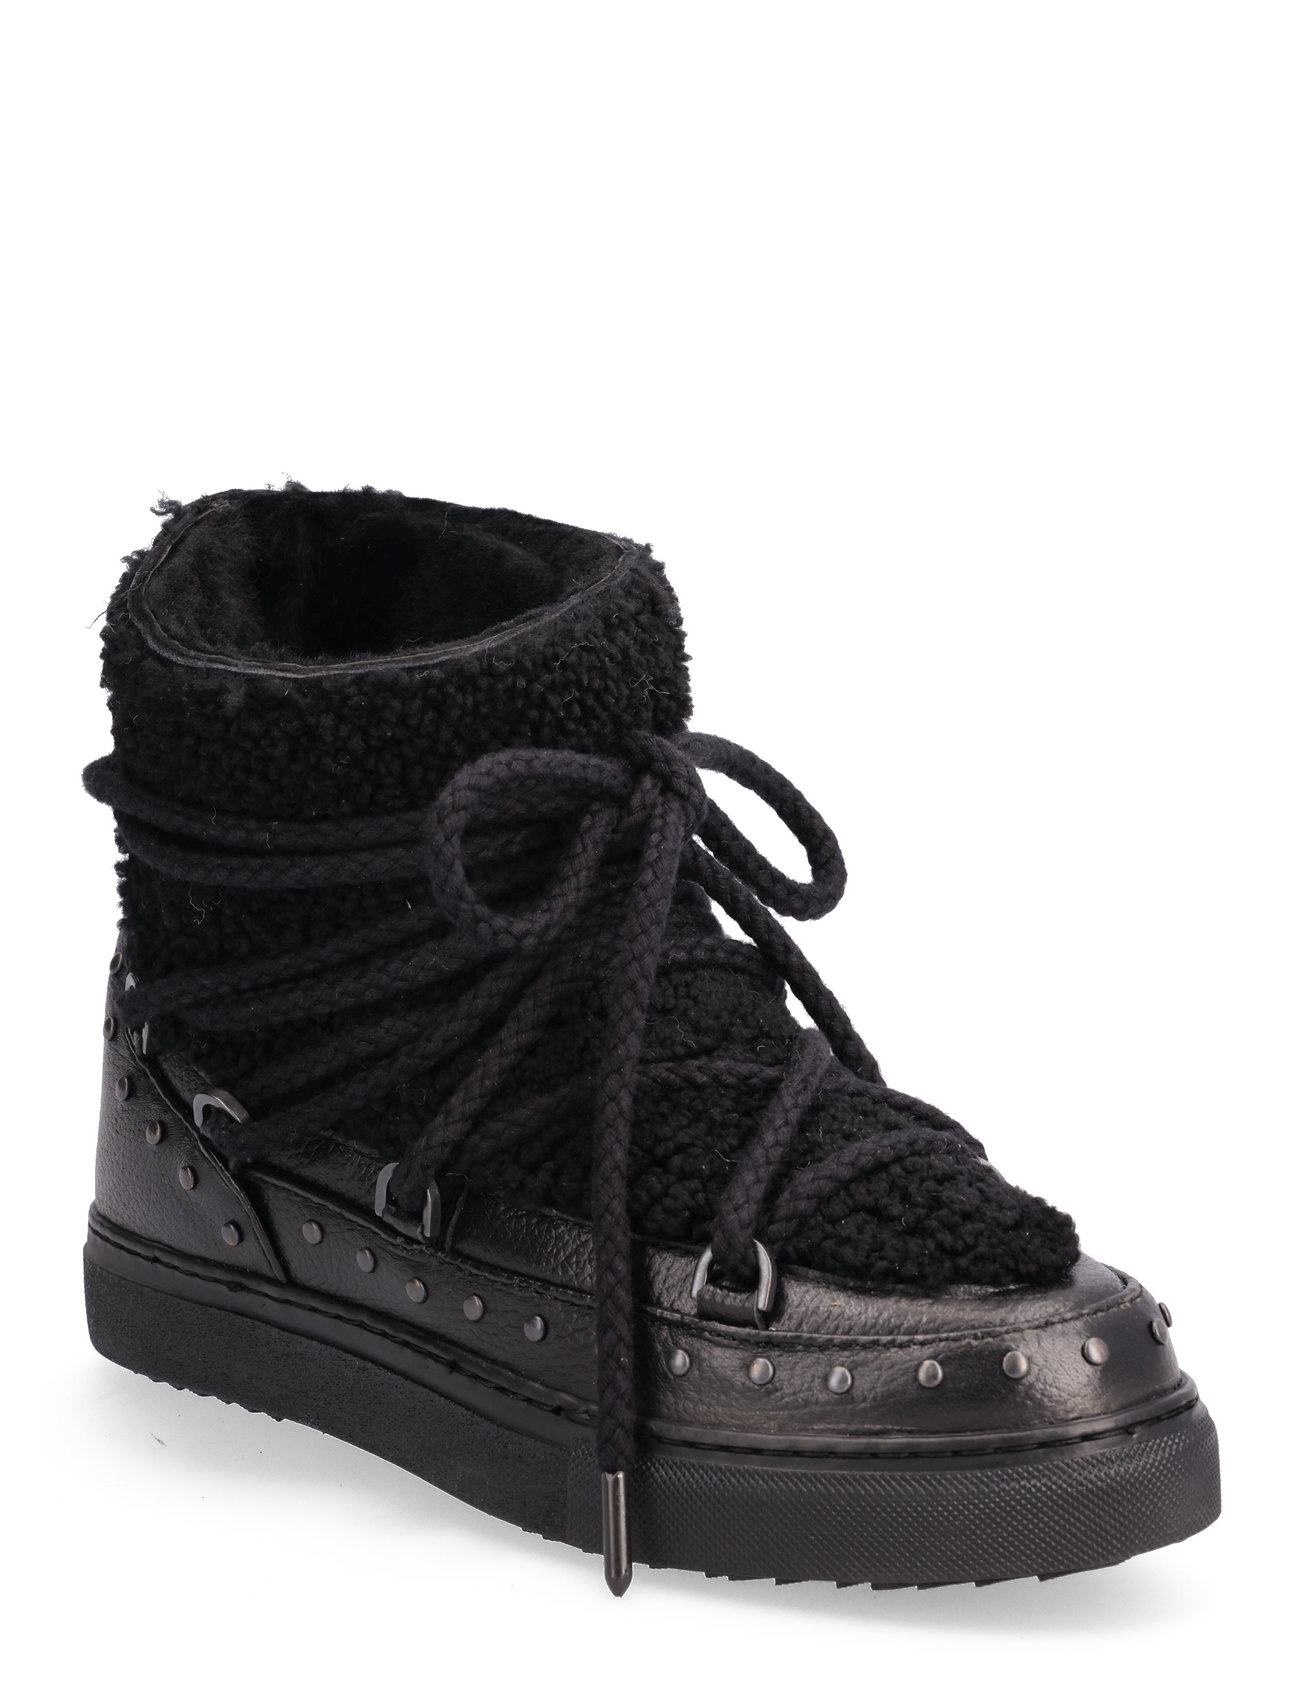 Curly Rock Shoes Wintershoes Winter Boots Svart Inuikii